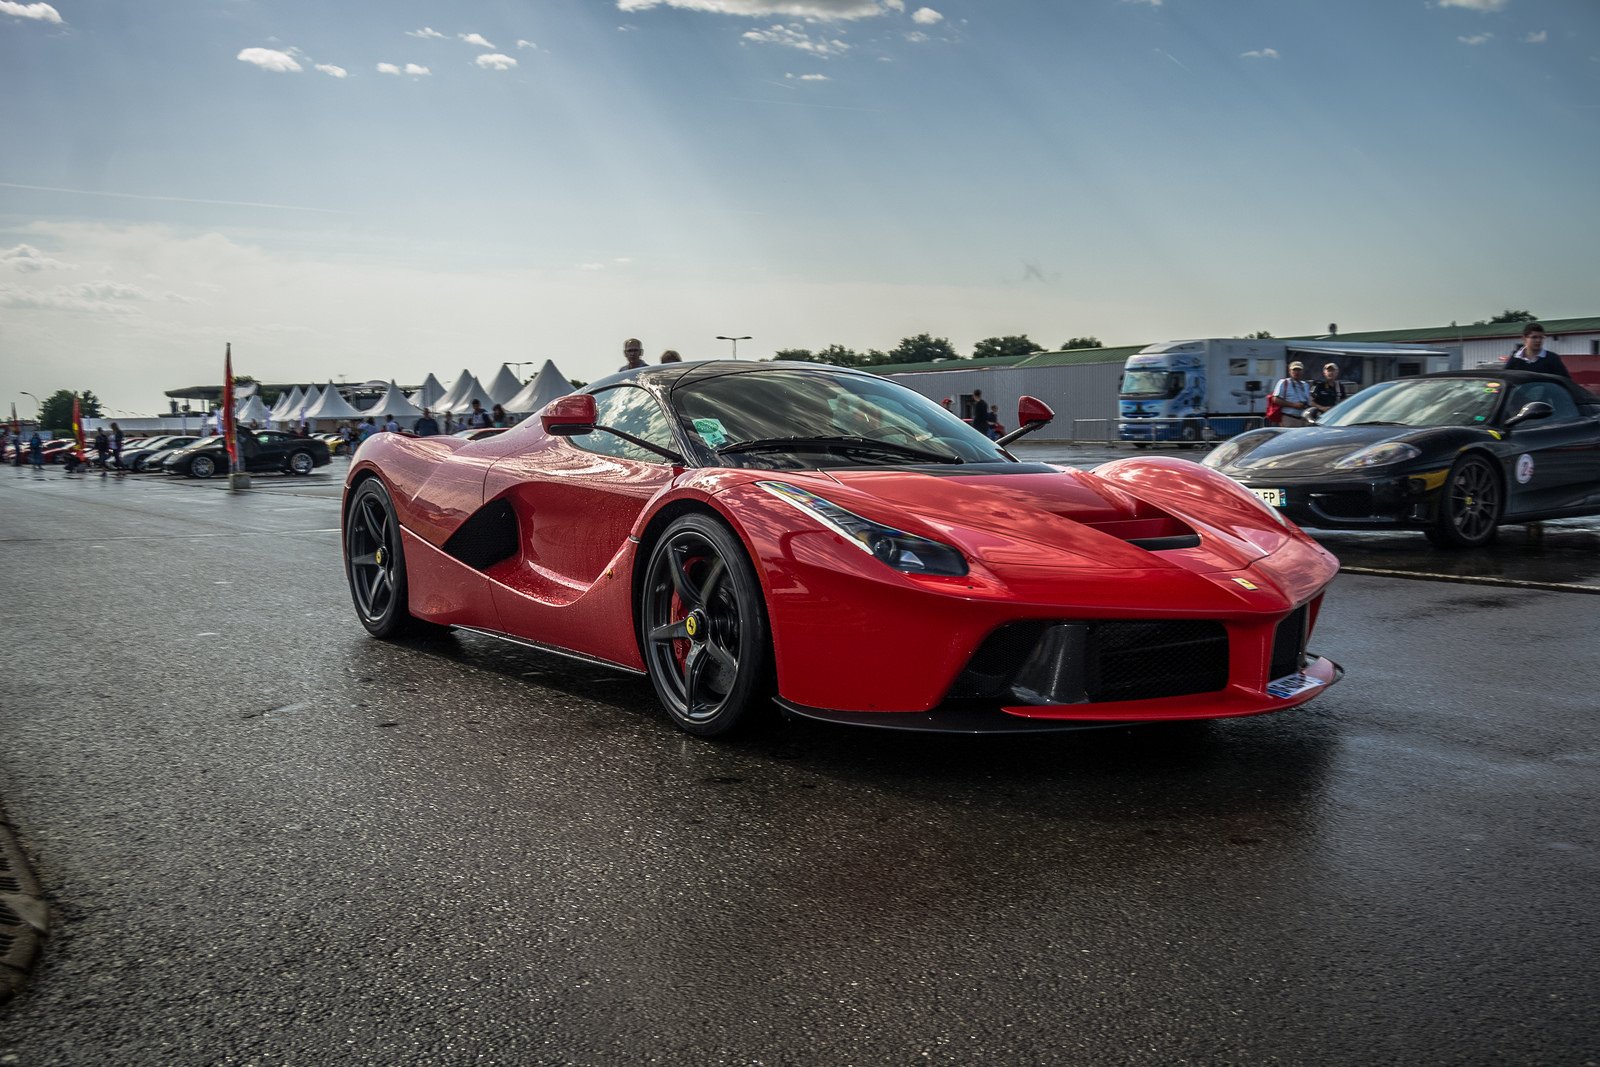 Top Rated HD Quality Ferrari Laferrari Image Wonderful Collection